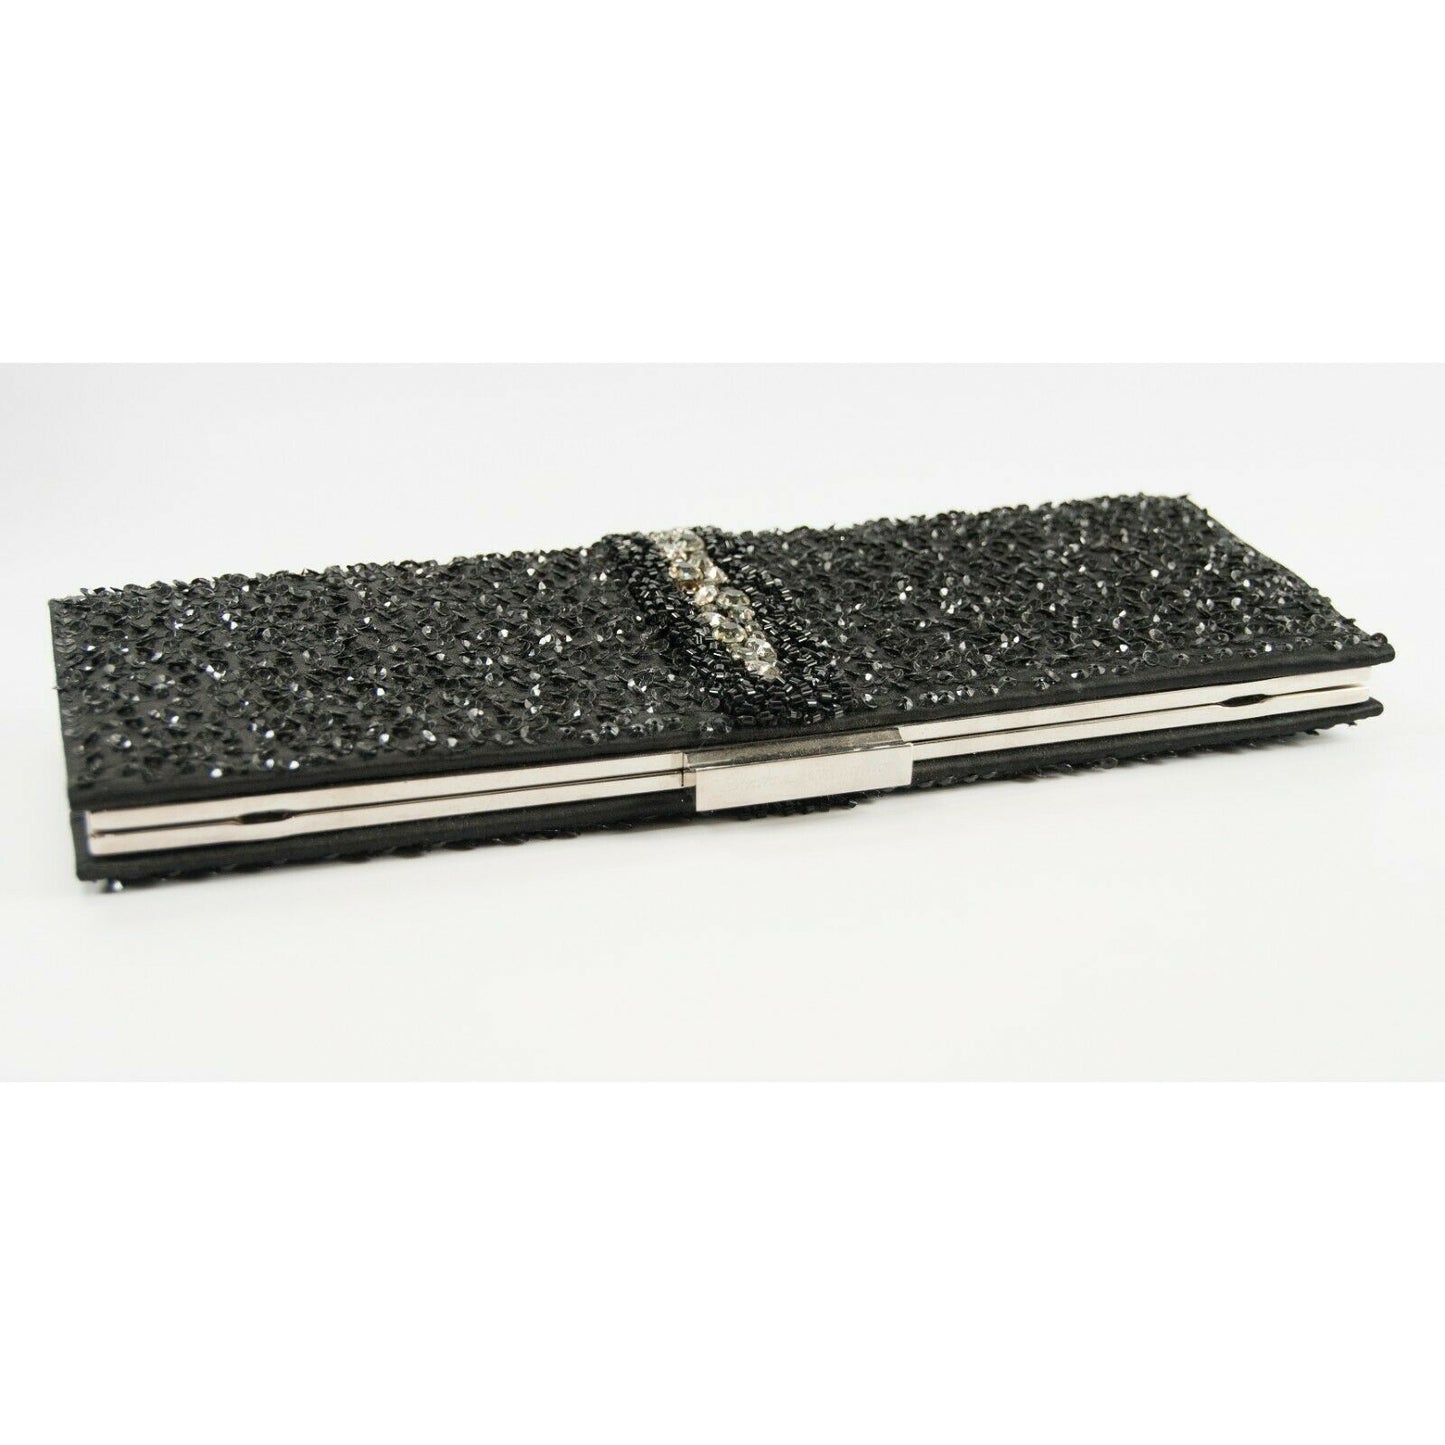 Salvatore Ferragamo Kameron Black Silver Framed Beaded Jewel Clutch Bag $2590